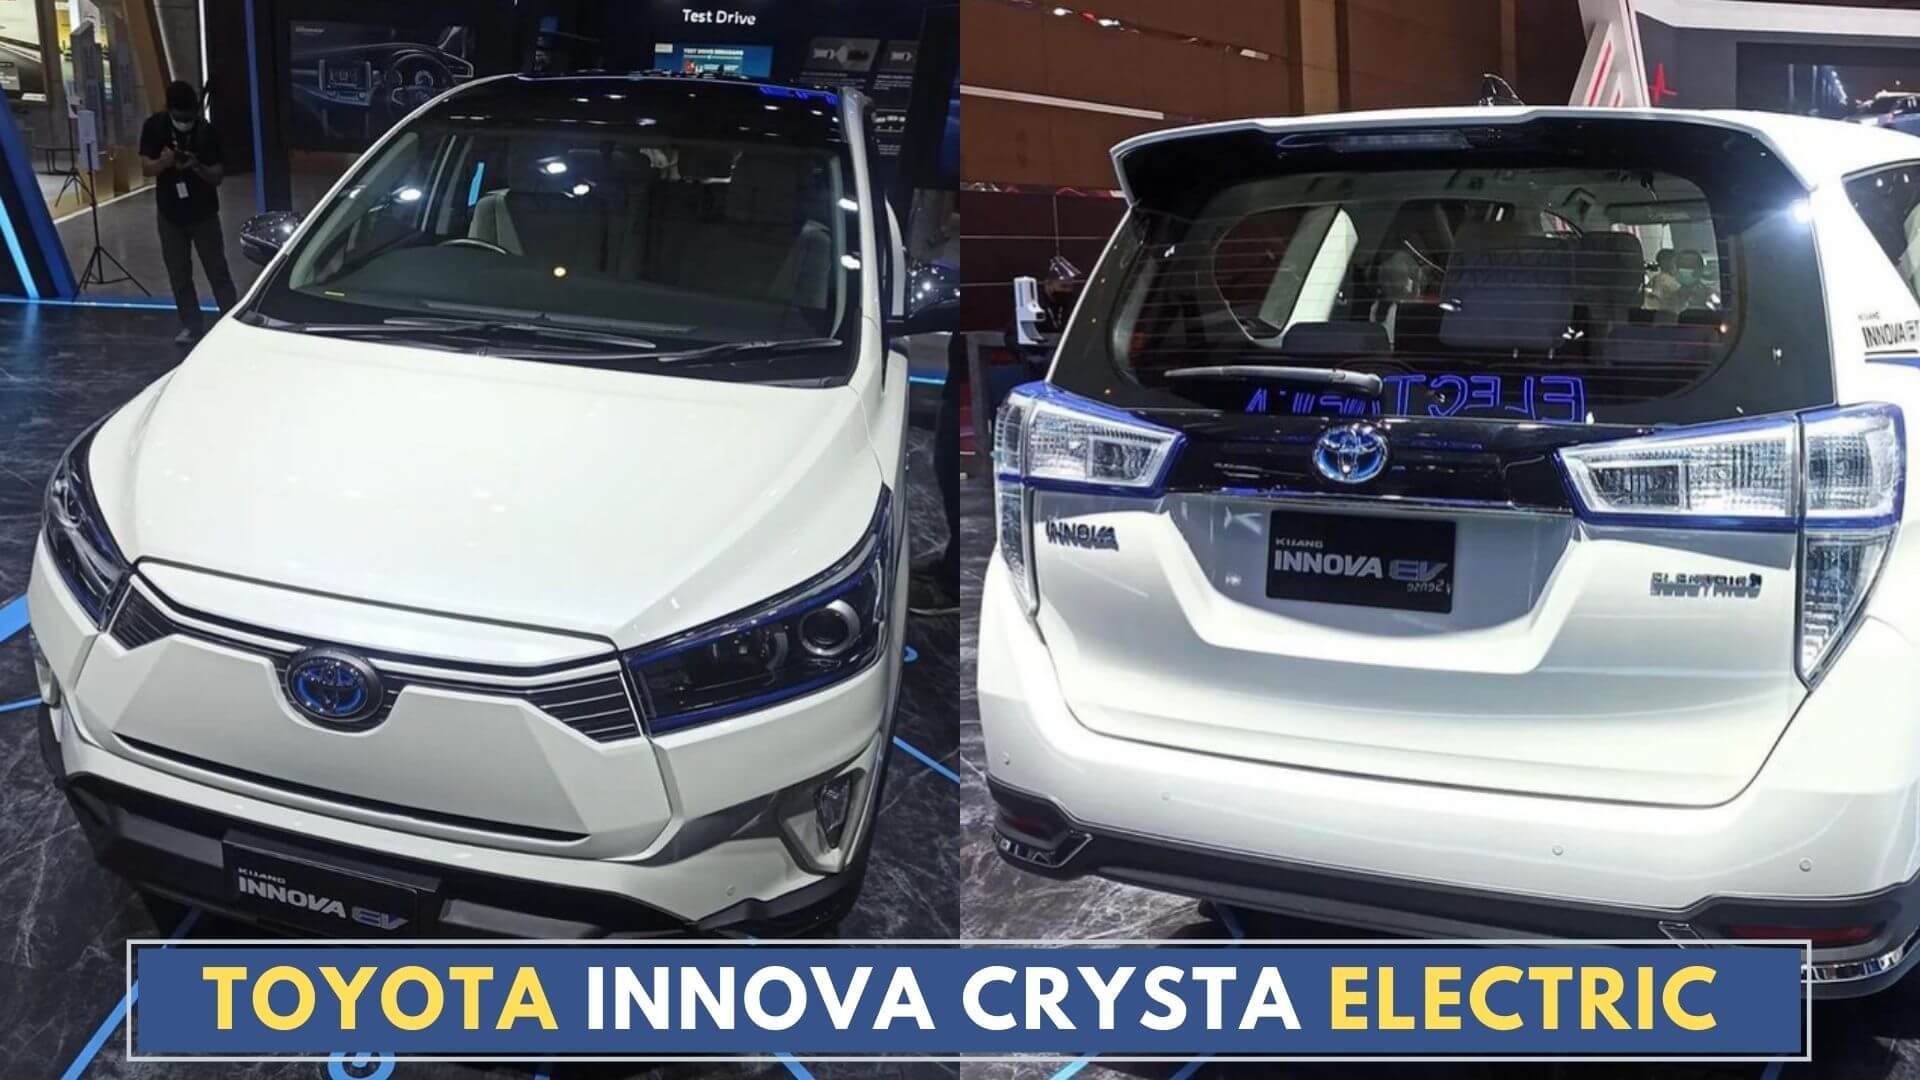 https://e-vehicleinfo.com/toyota-innova-crysta-electric-concept/